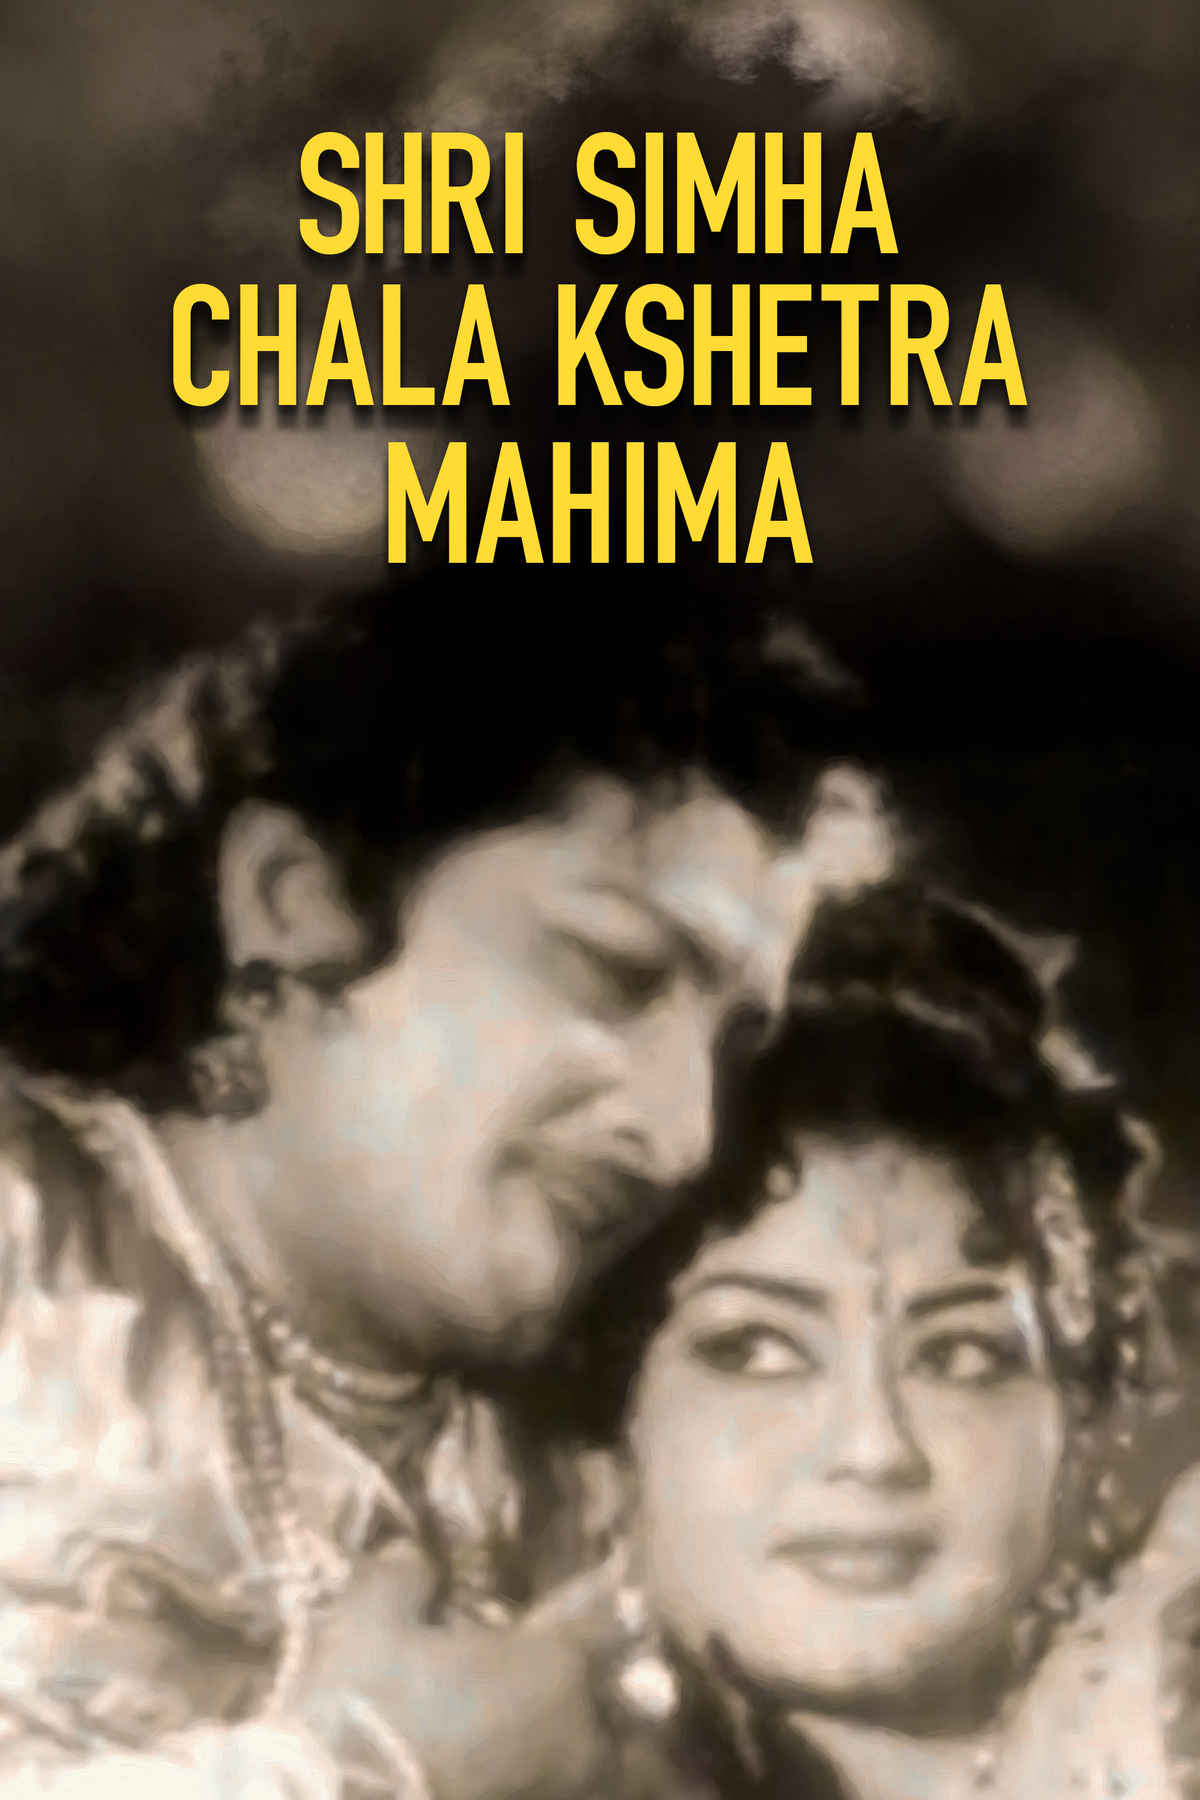 Shri Simha Chala Kshetra Mahima